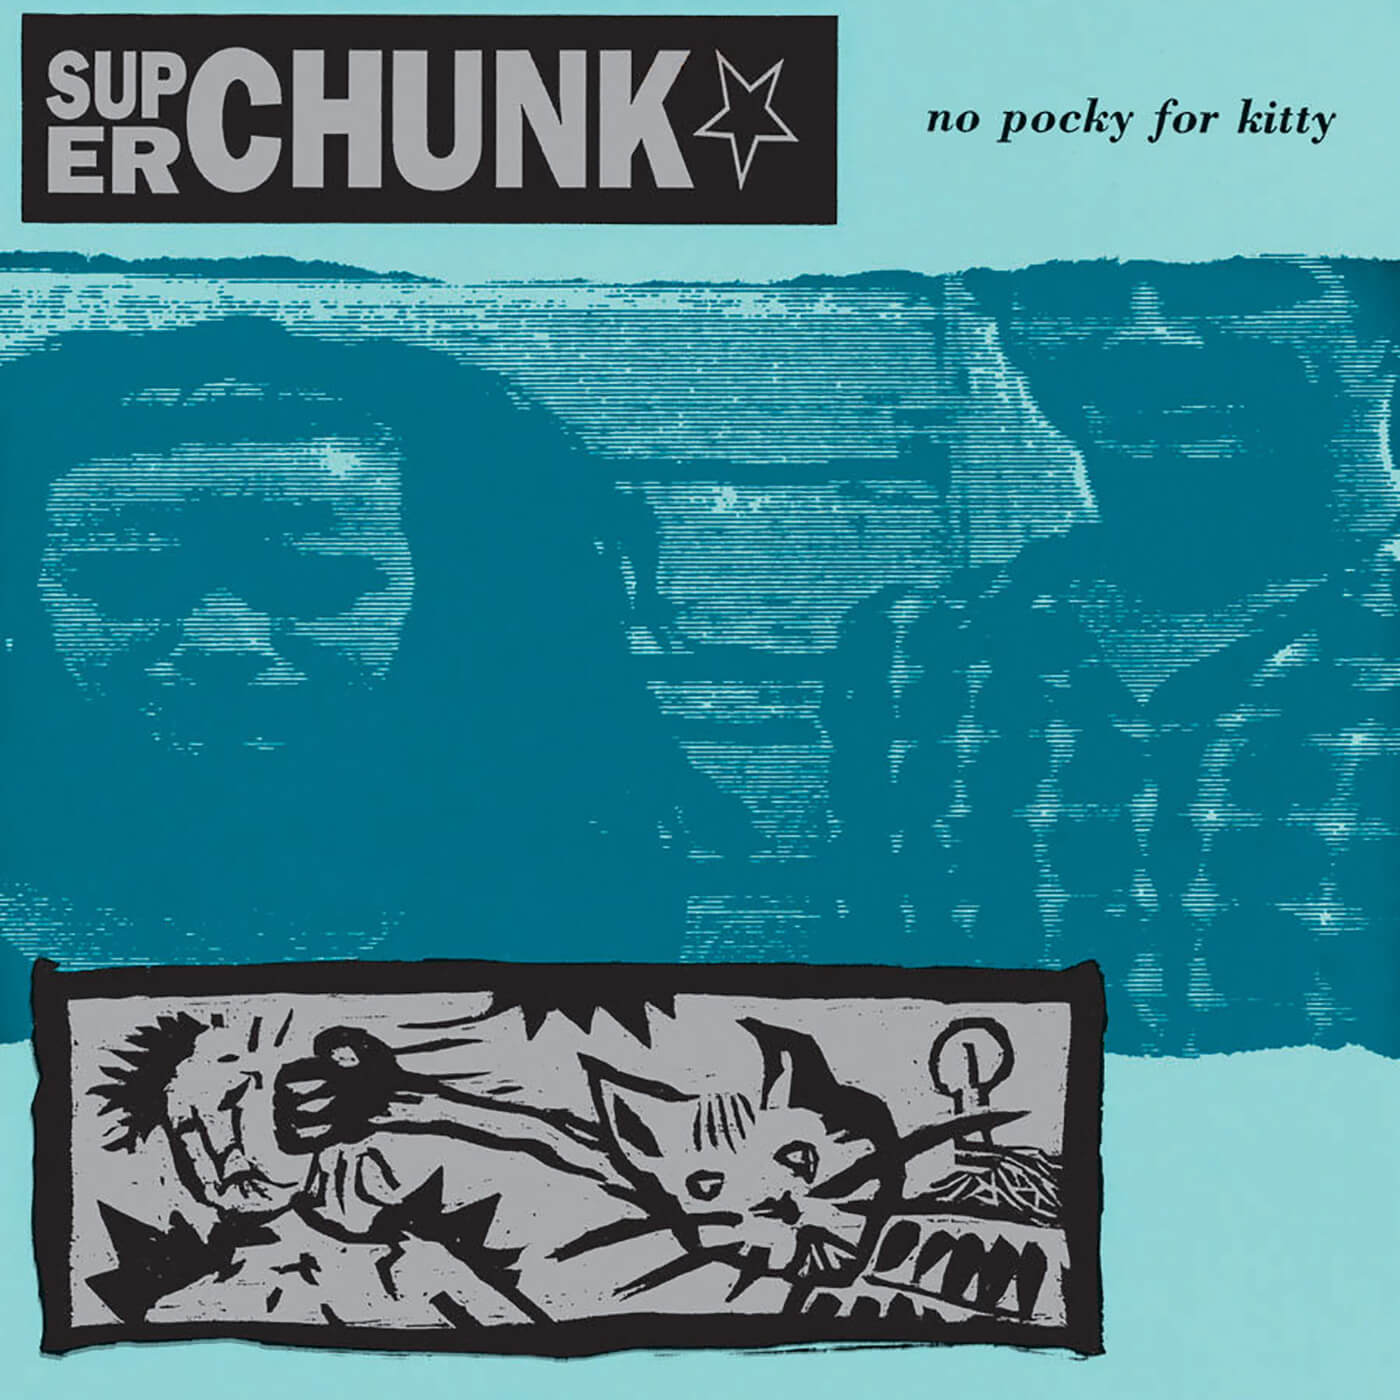 SuperChunk-凯蒂（Kitty）没有pokcy